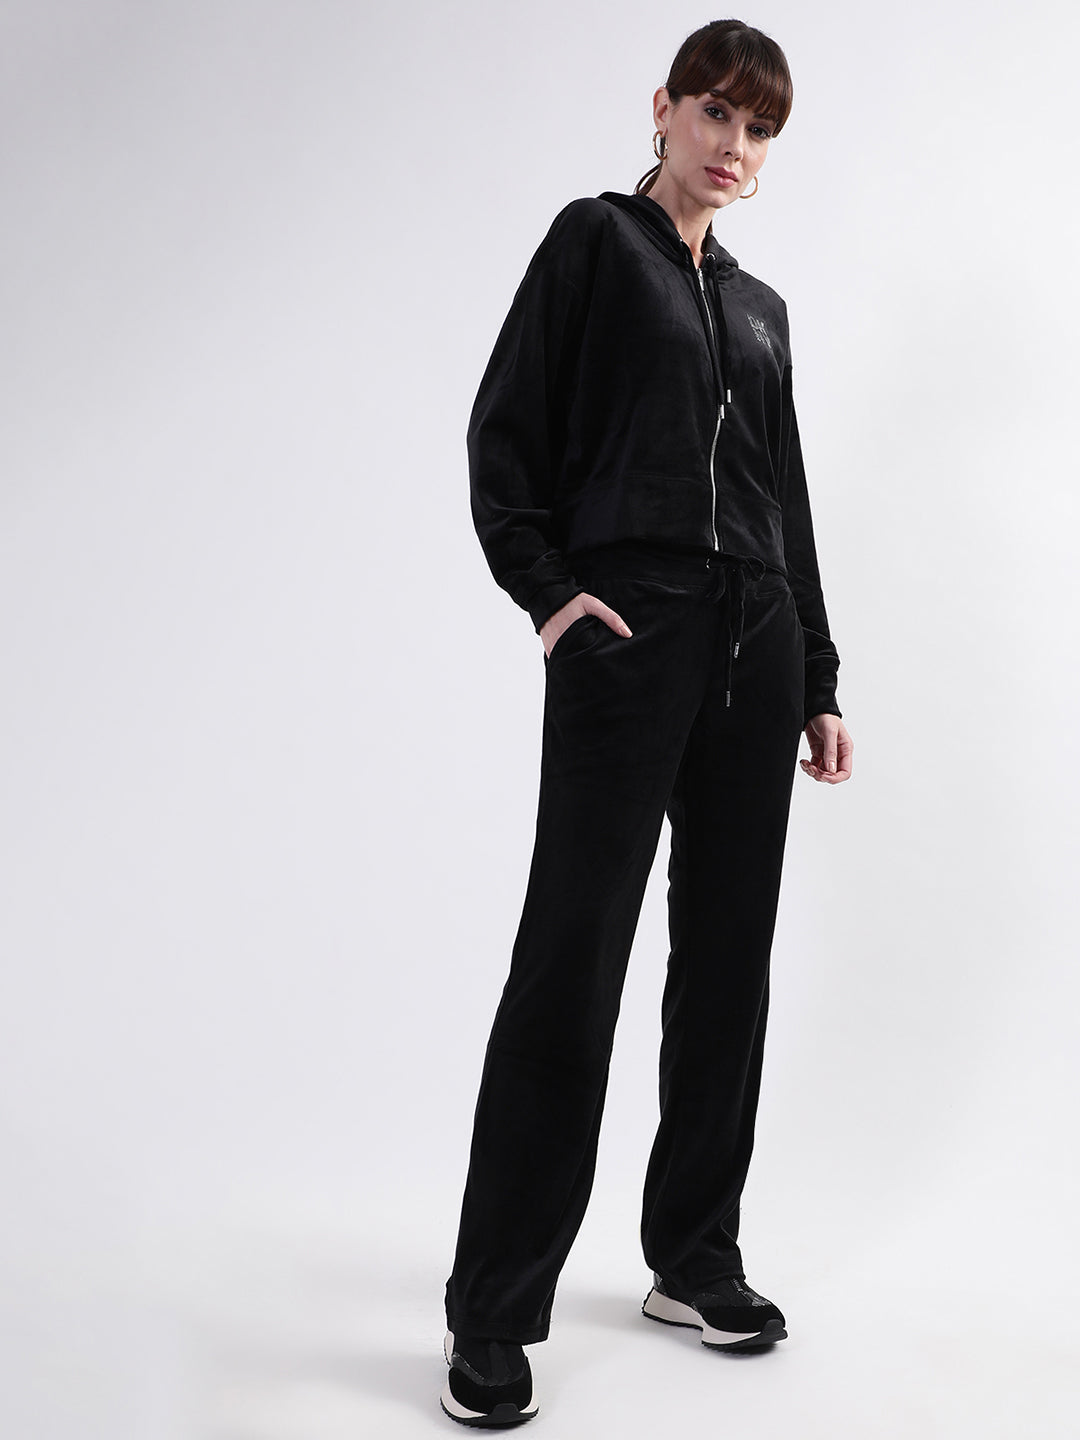 DKNY Women Black Solid Regular Fit Sweatpant